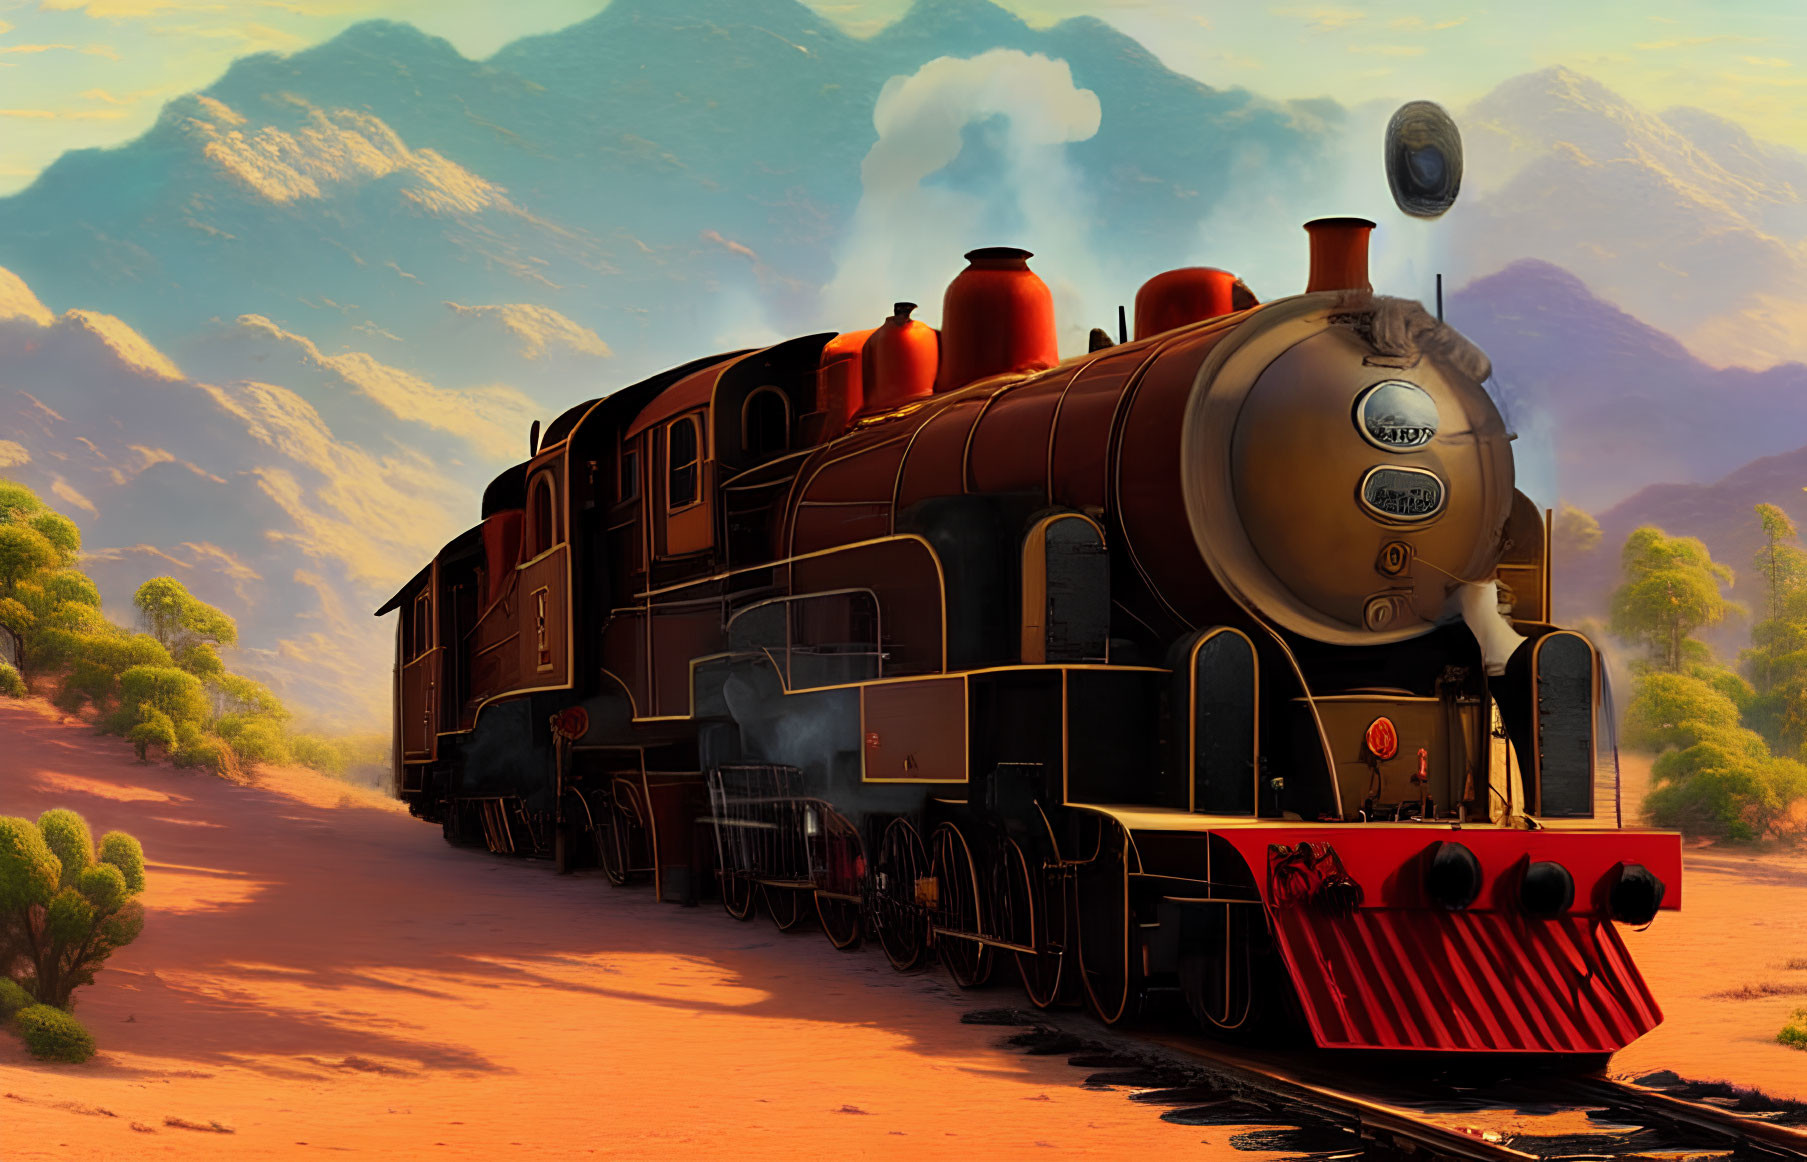 Vintage black steam locomotive with red trim in desert landscape under hazy sky